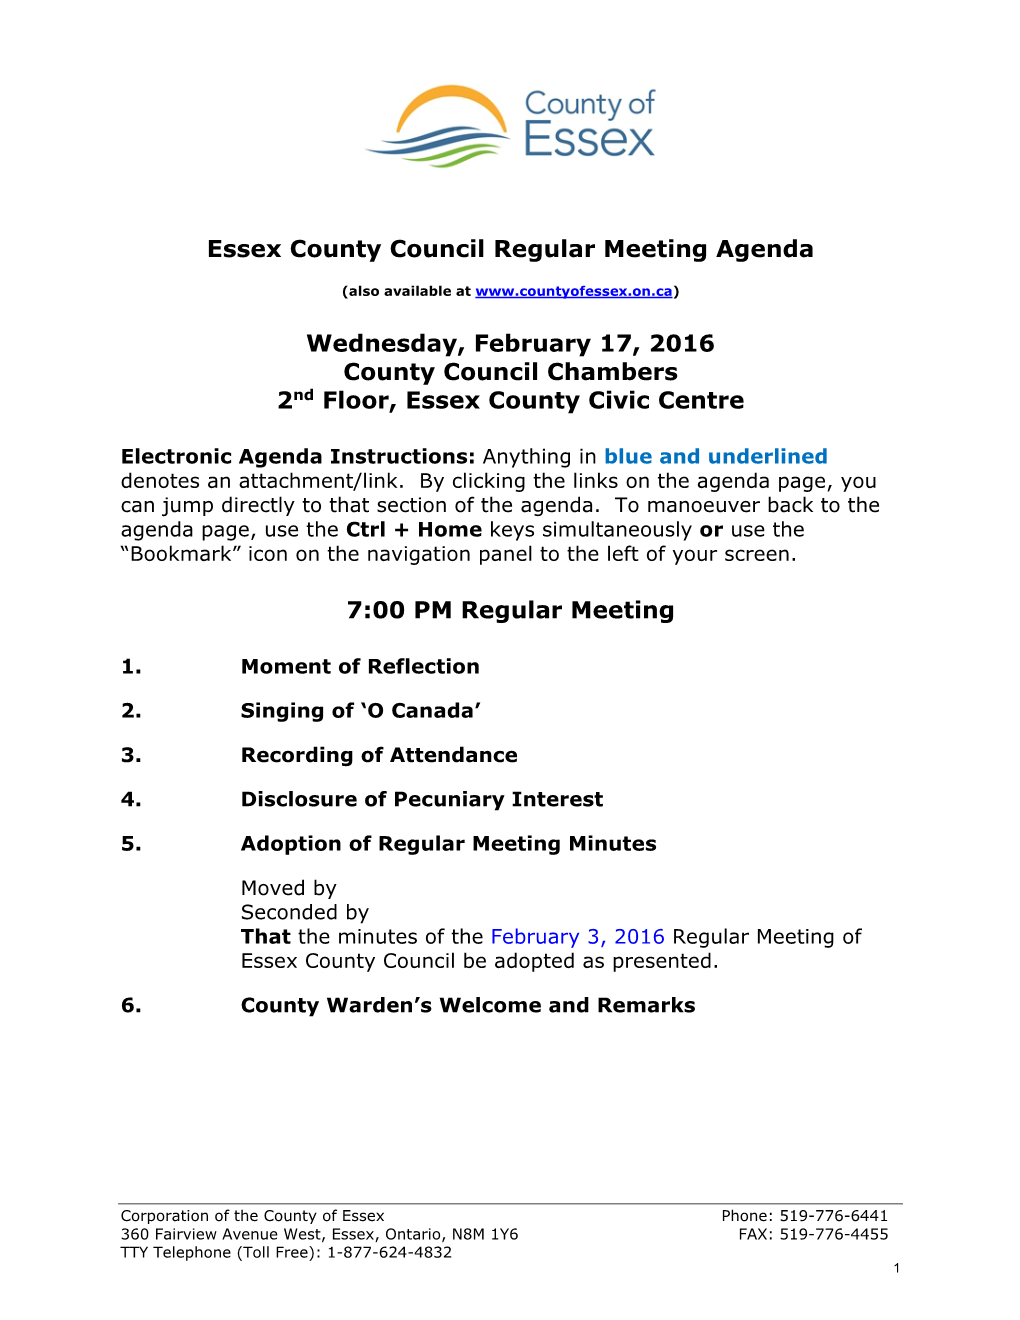 Essex County Council Agenda Regular Meeting February 17, 2016